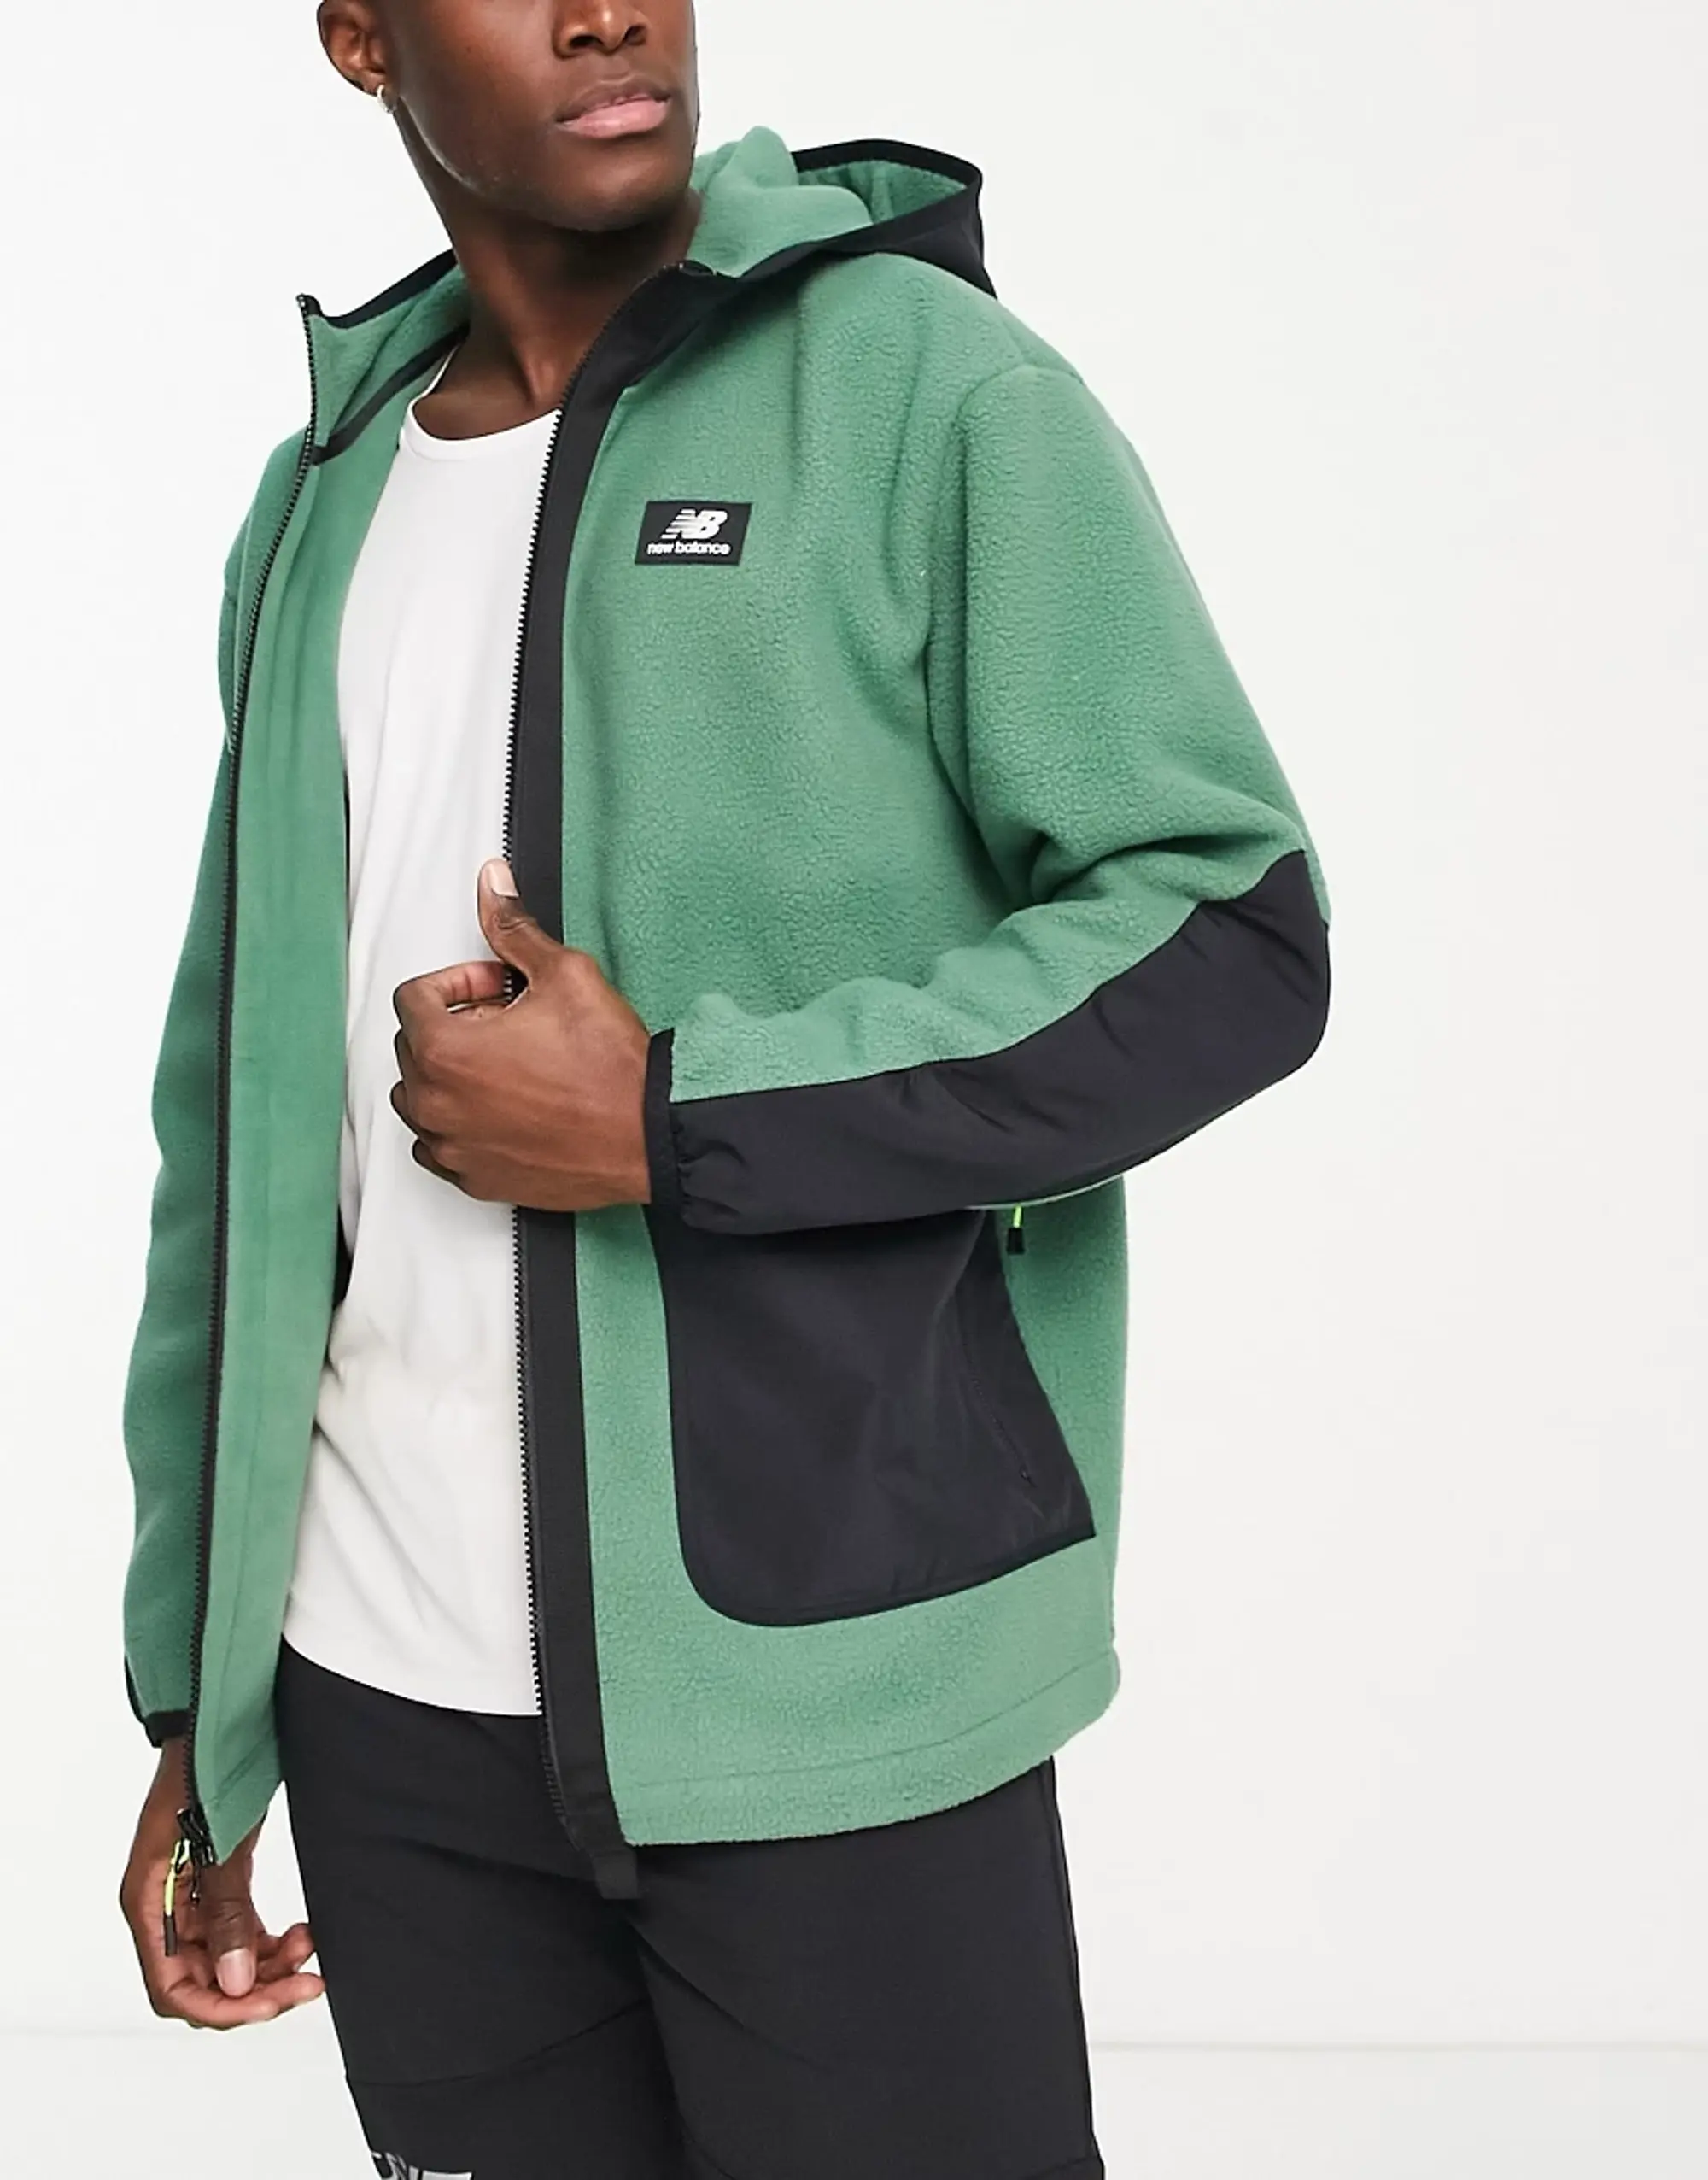 New Balance Unisex All Terrain Season Hooded Jacket In Khaki-Green